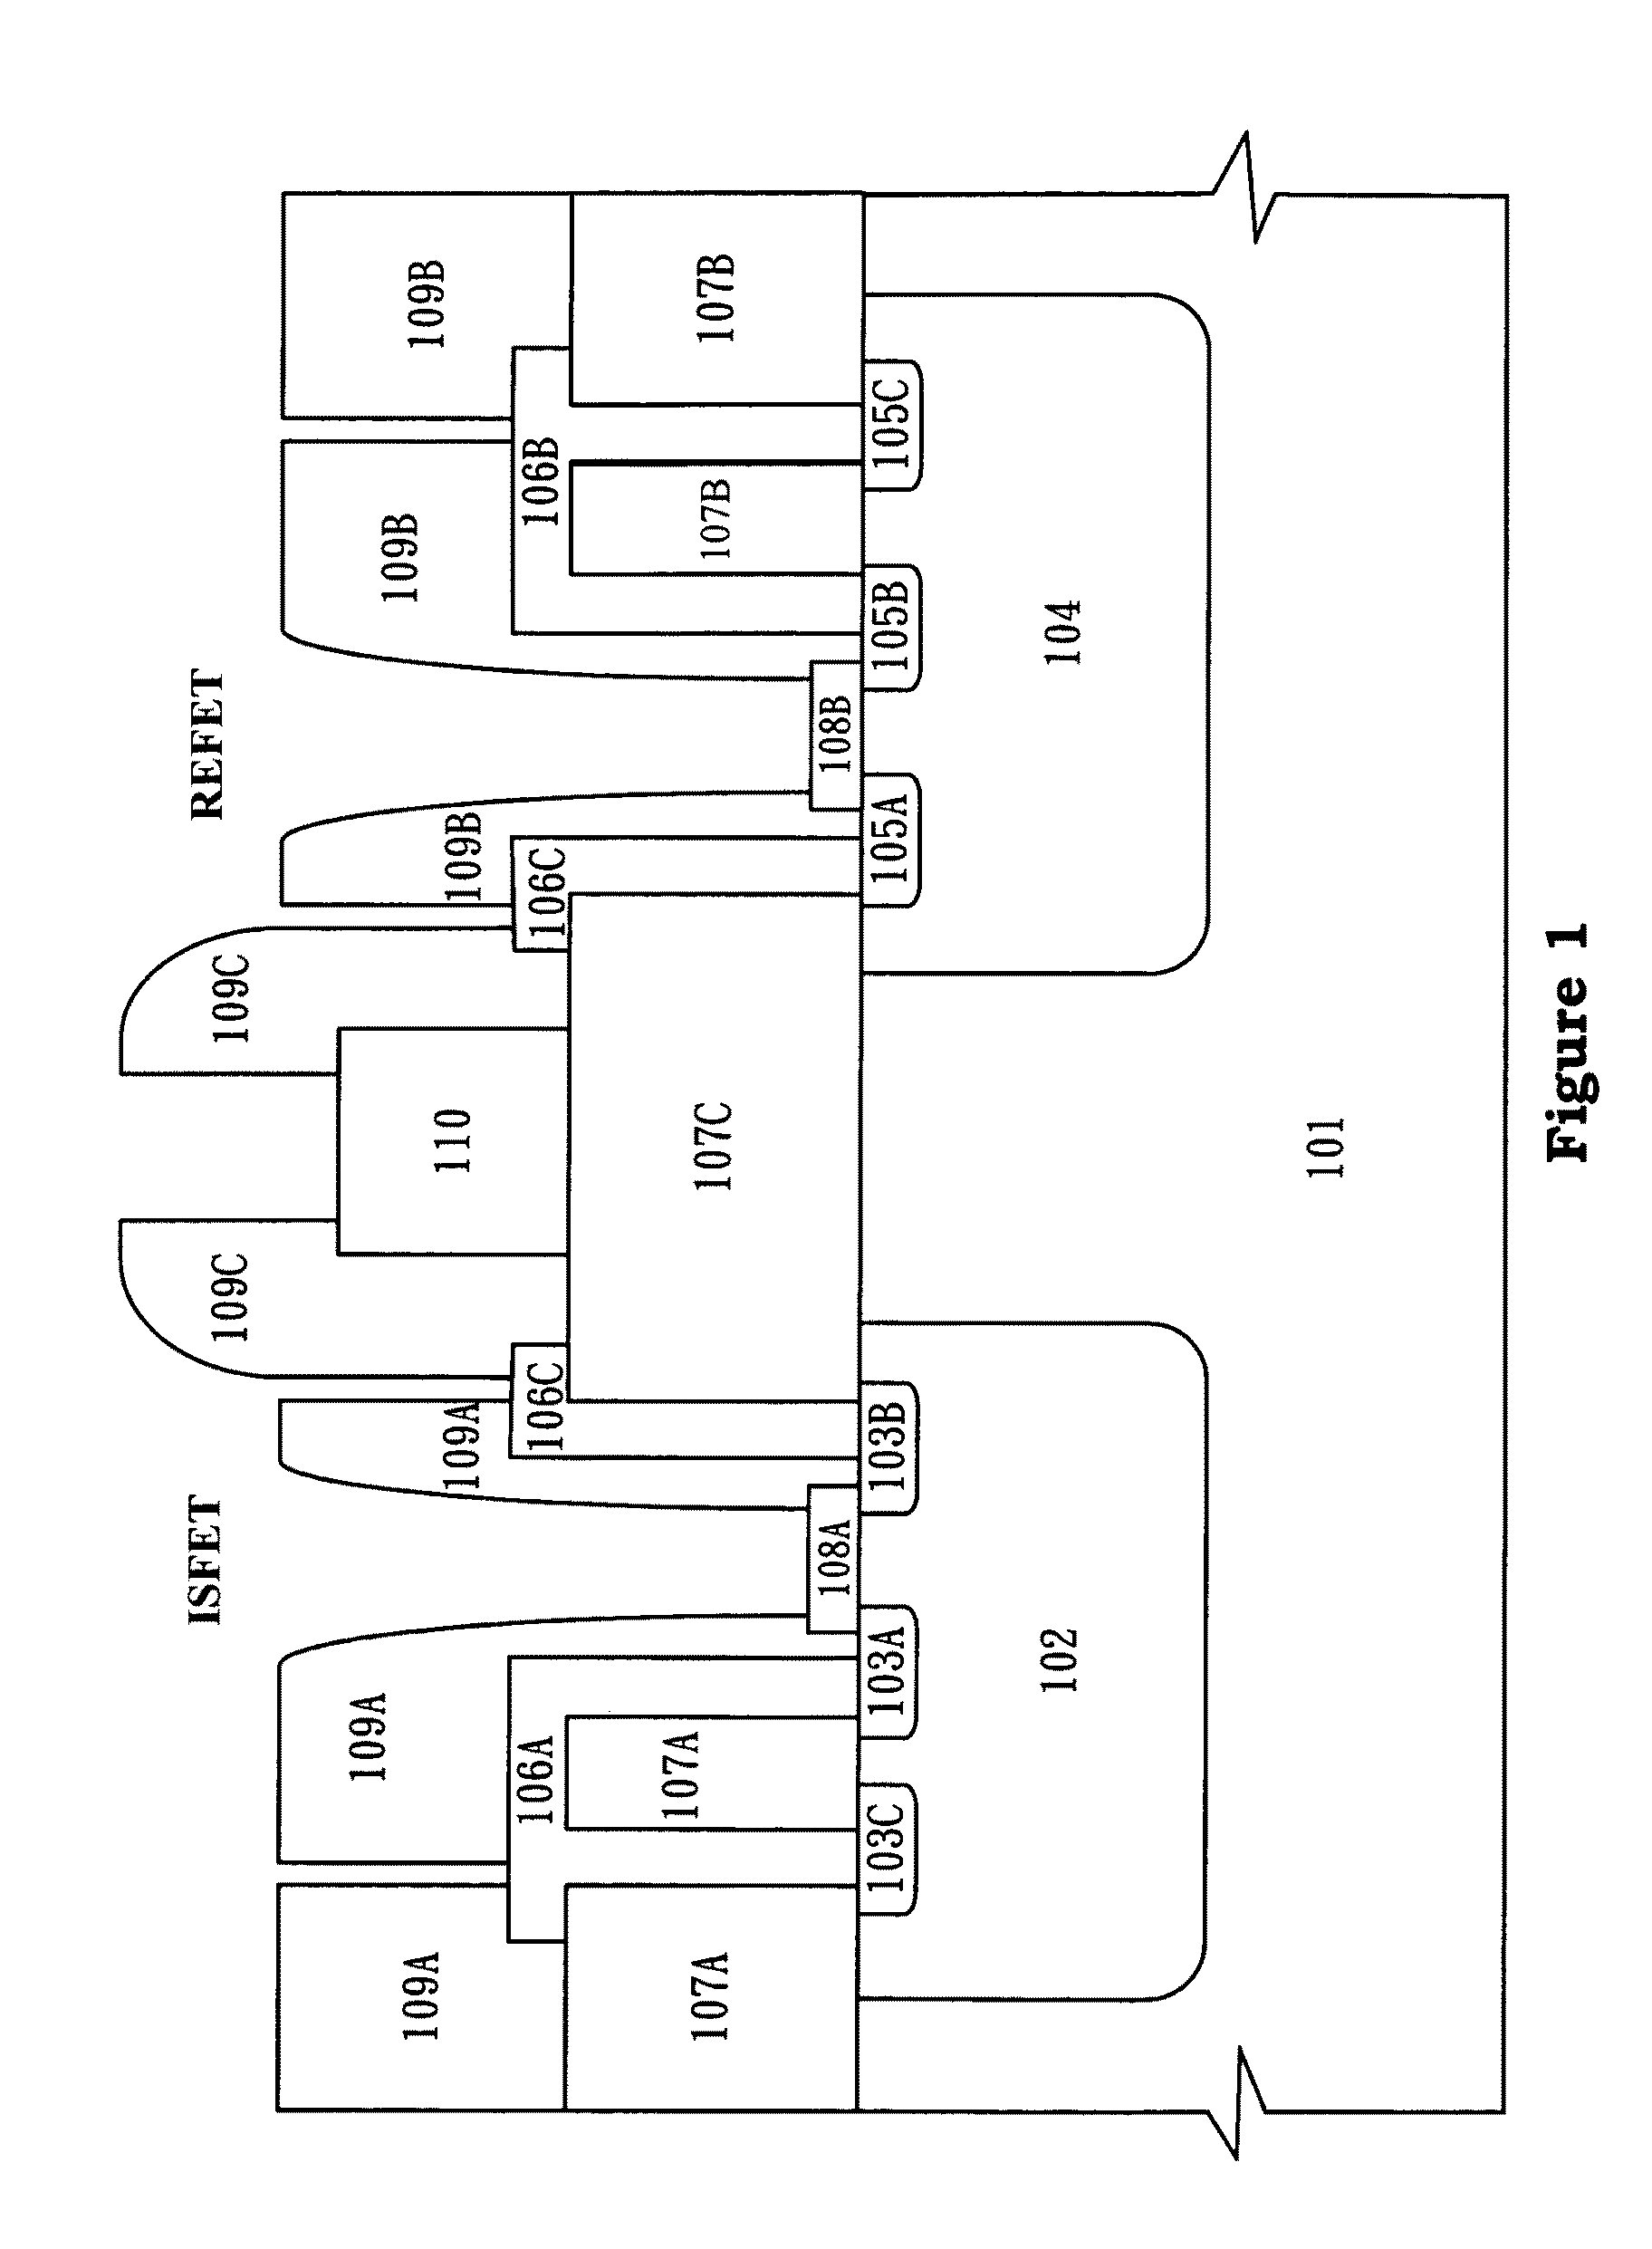 Sensitive field effect transistor apparatus